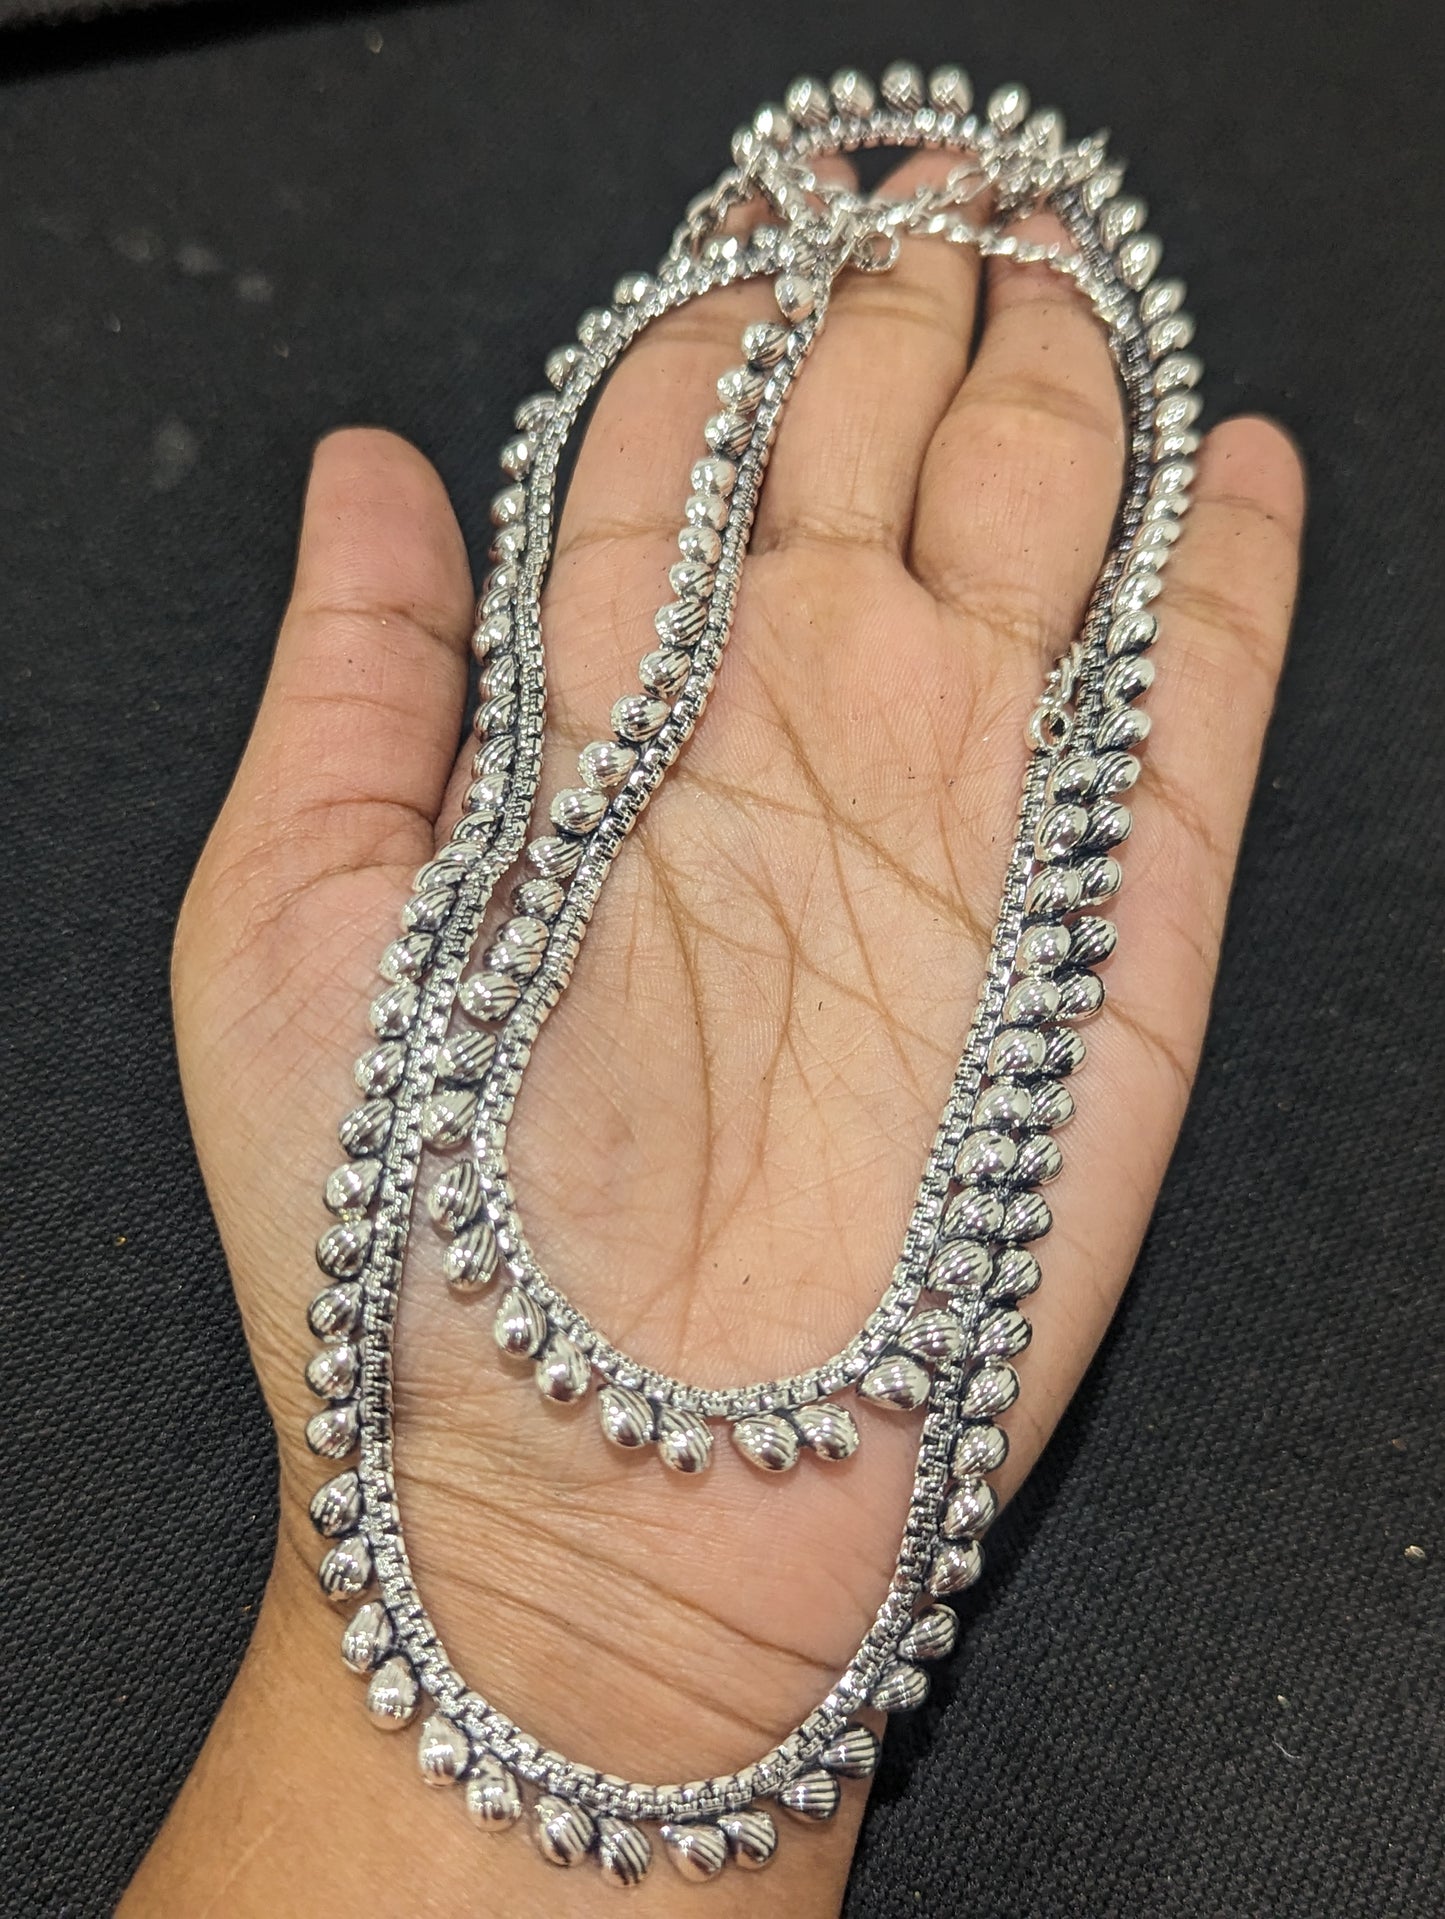 Oxidized Silver Hip Chain / Waist Belt / Belly Chain - D1